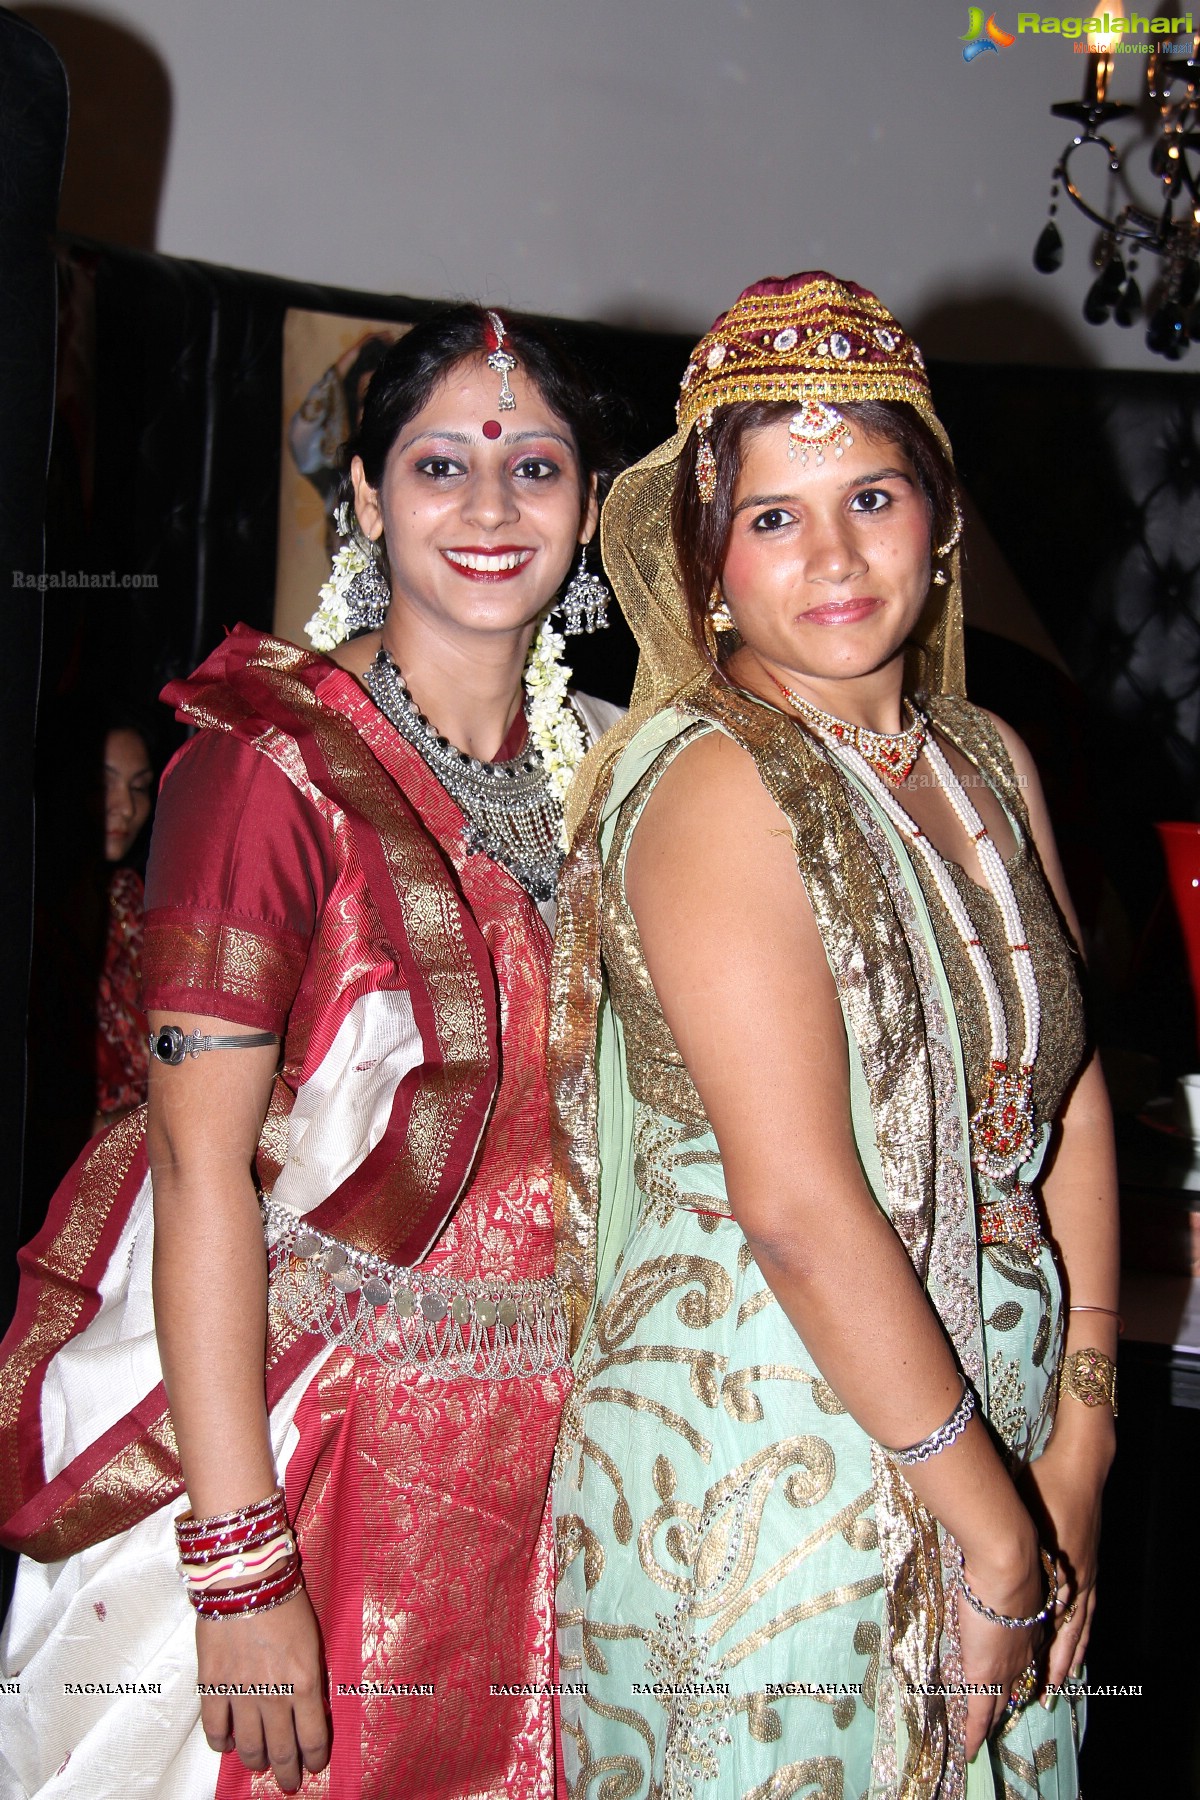 Gorgeous Girls Club Bollywood Theme Party